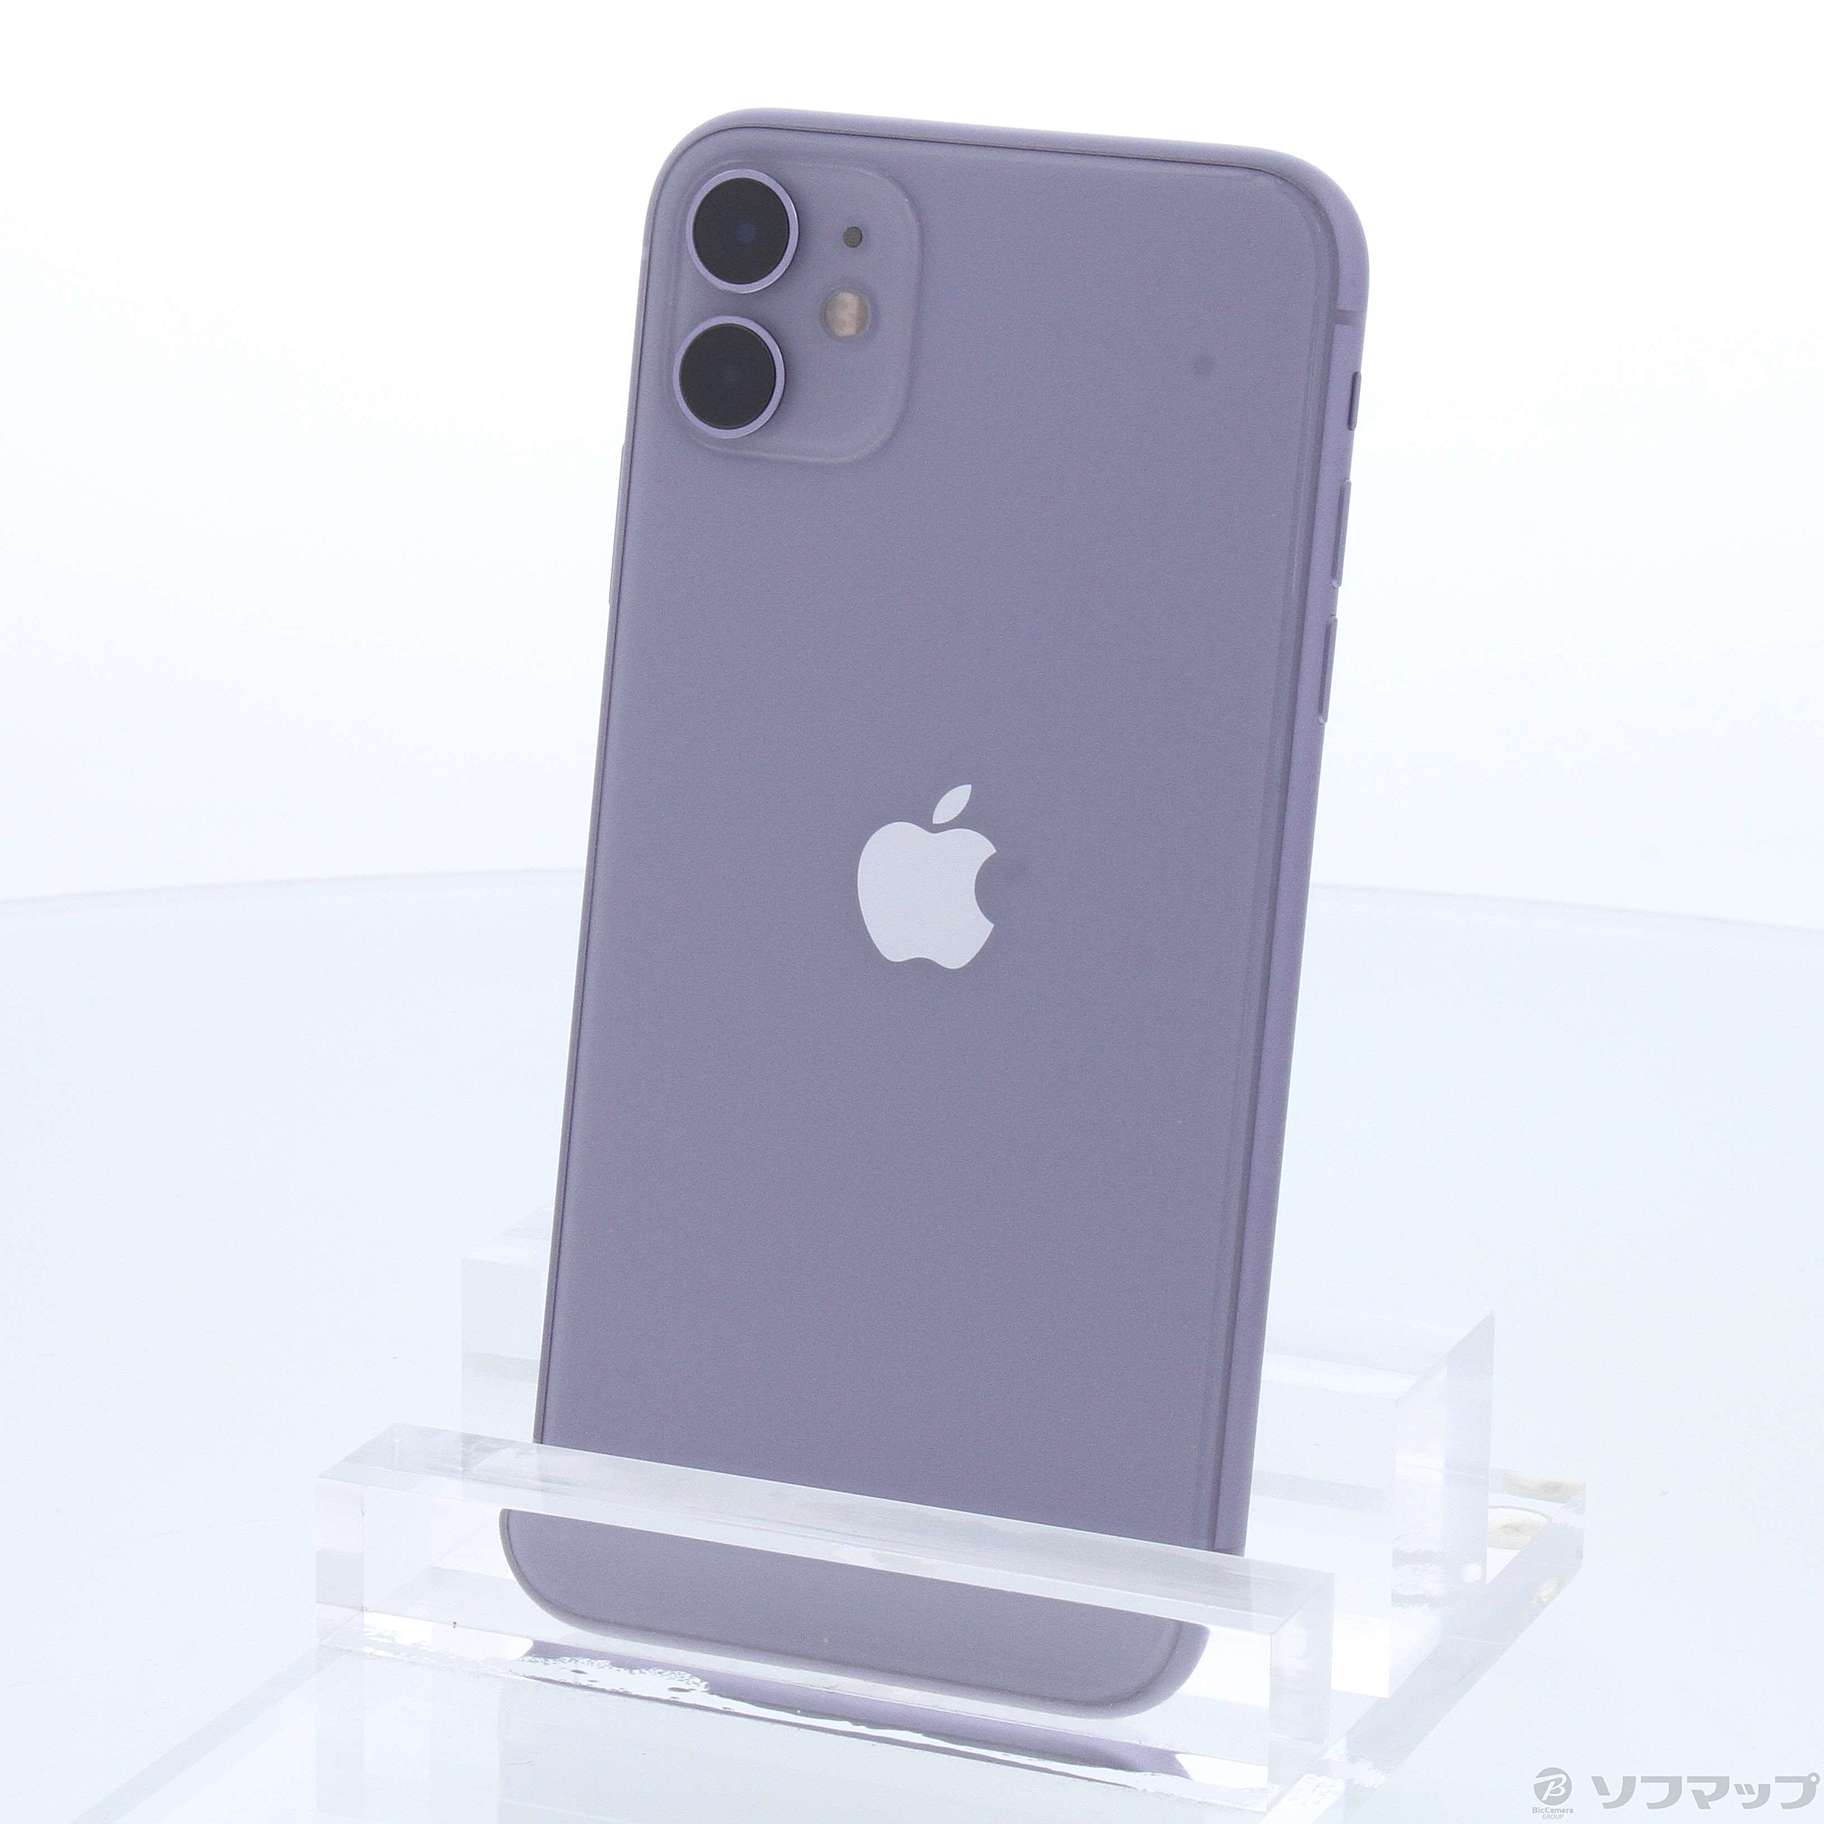 iPhone 11 パープル 64GB SIMフリー Apple MWLX2JiPhone - stater.lt